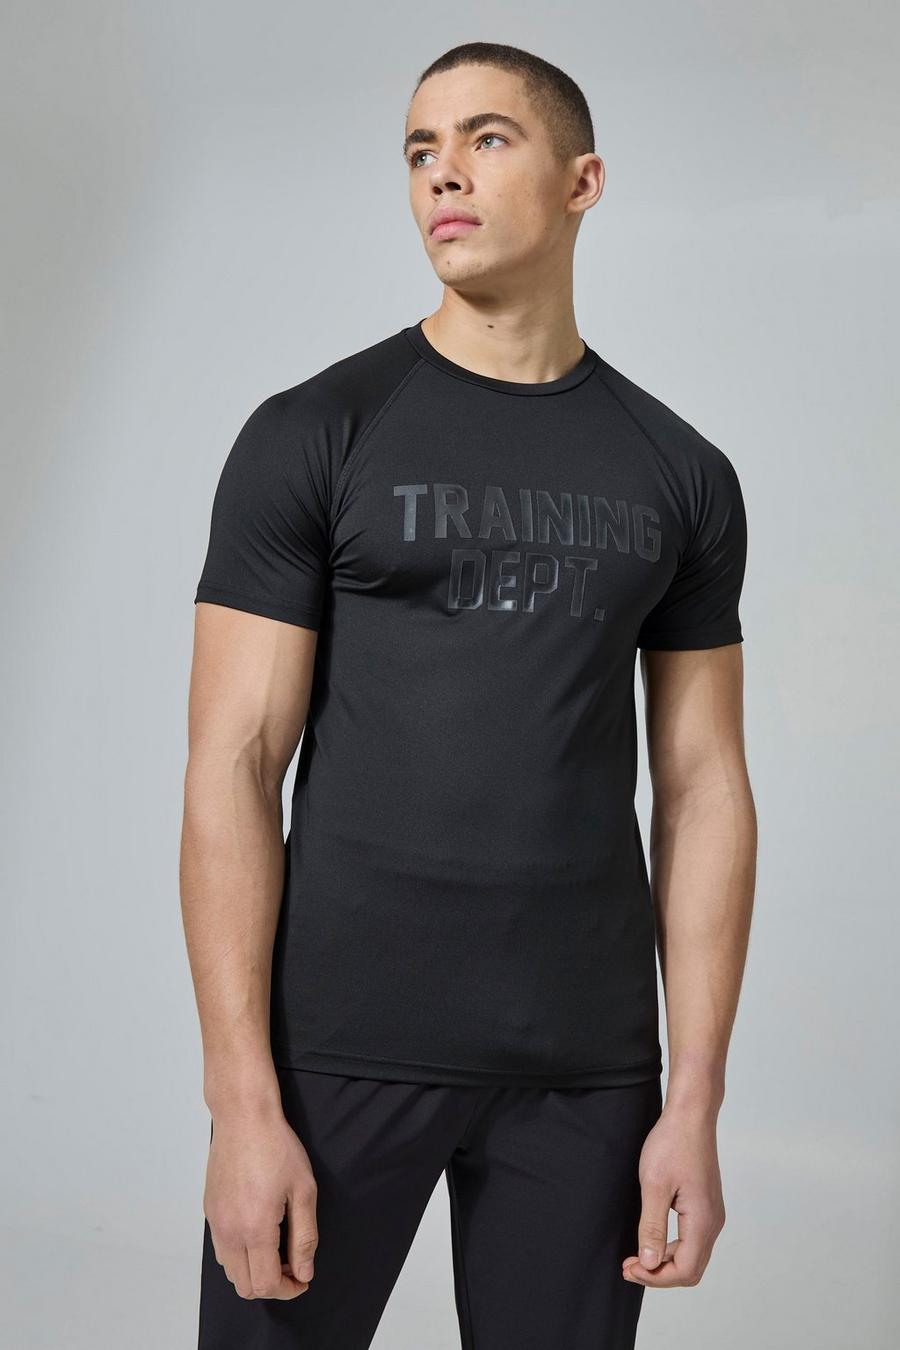 T-shirt attillata Active Training Dept, Black